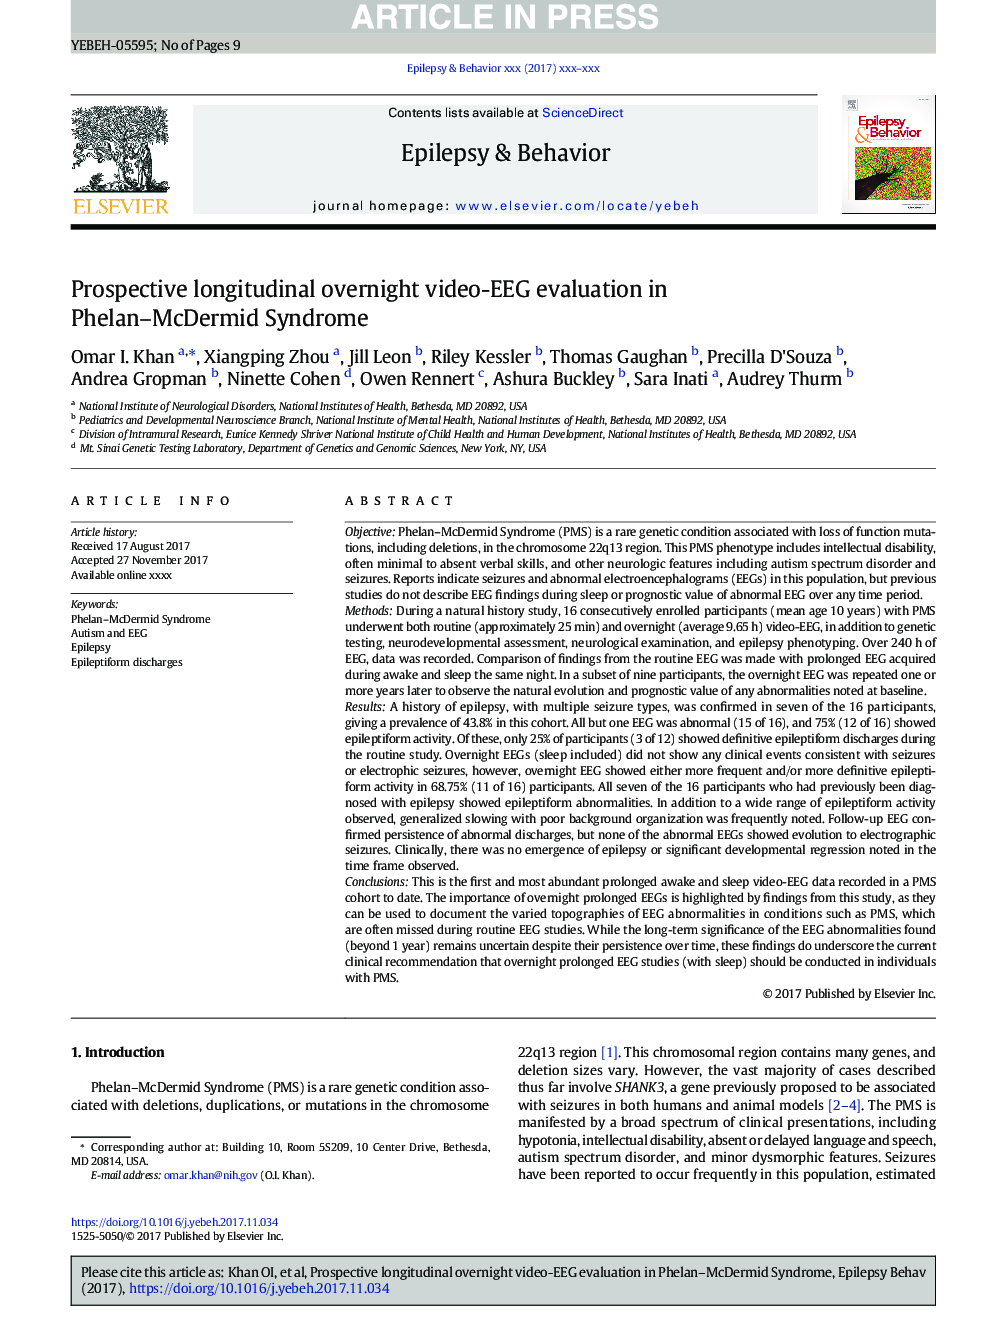 Prospective longitudinal overnight video-EEG evaluation in Phelan-McDermid Syndrome